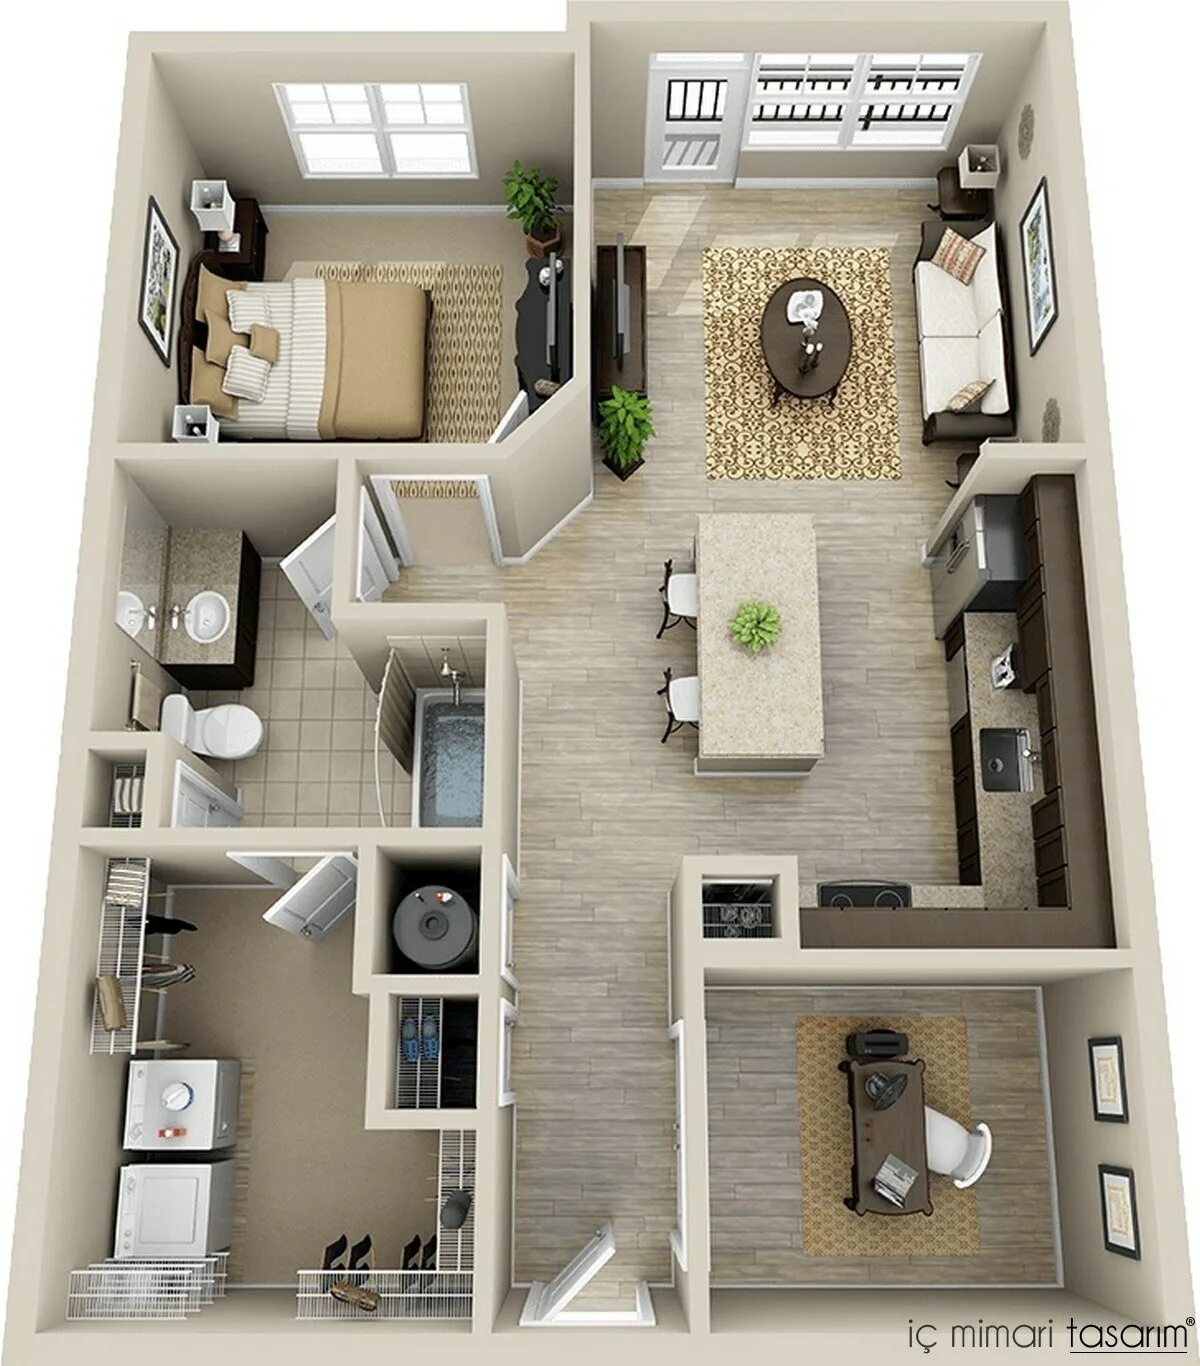 Квартира в симс 4 планировка. Планировка комнаты. Интересные планировки квартир. Планировка квартиры вид сверху. Однокомнатная квартира вид